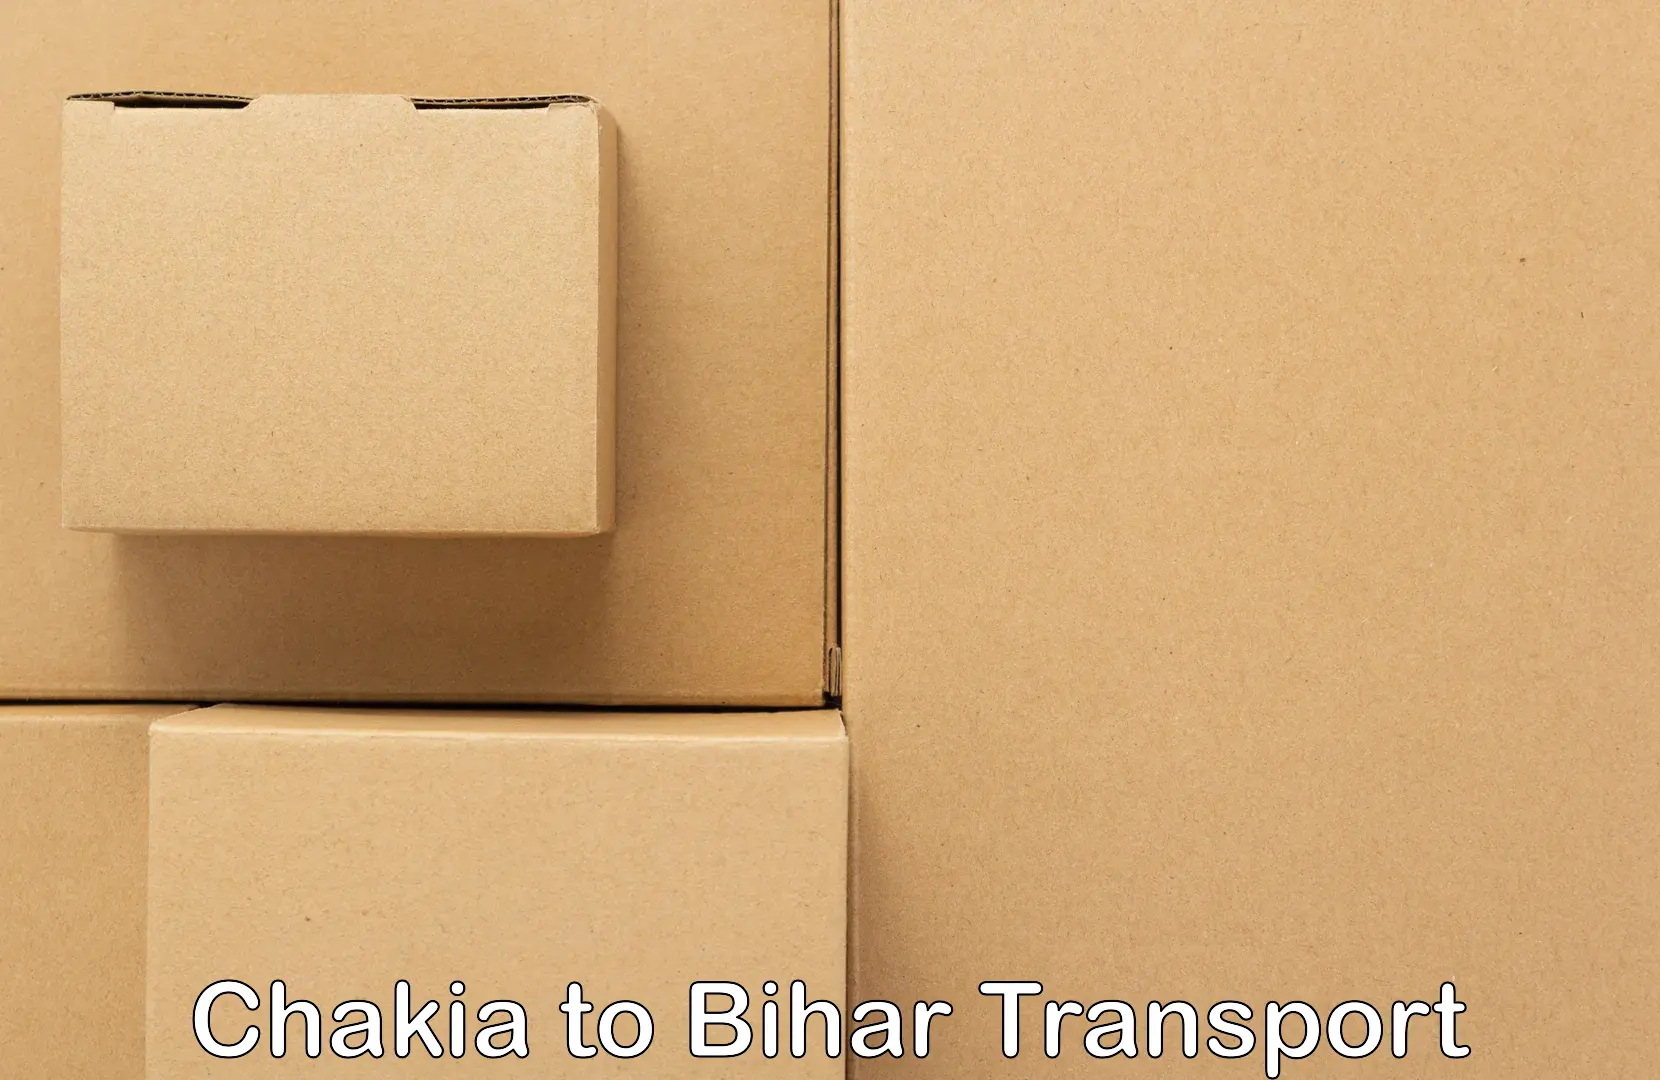 Air freight transport services Chakia to Dinara